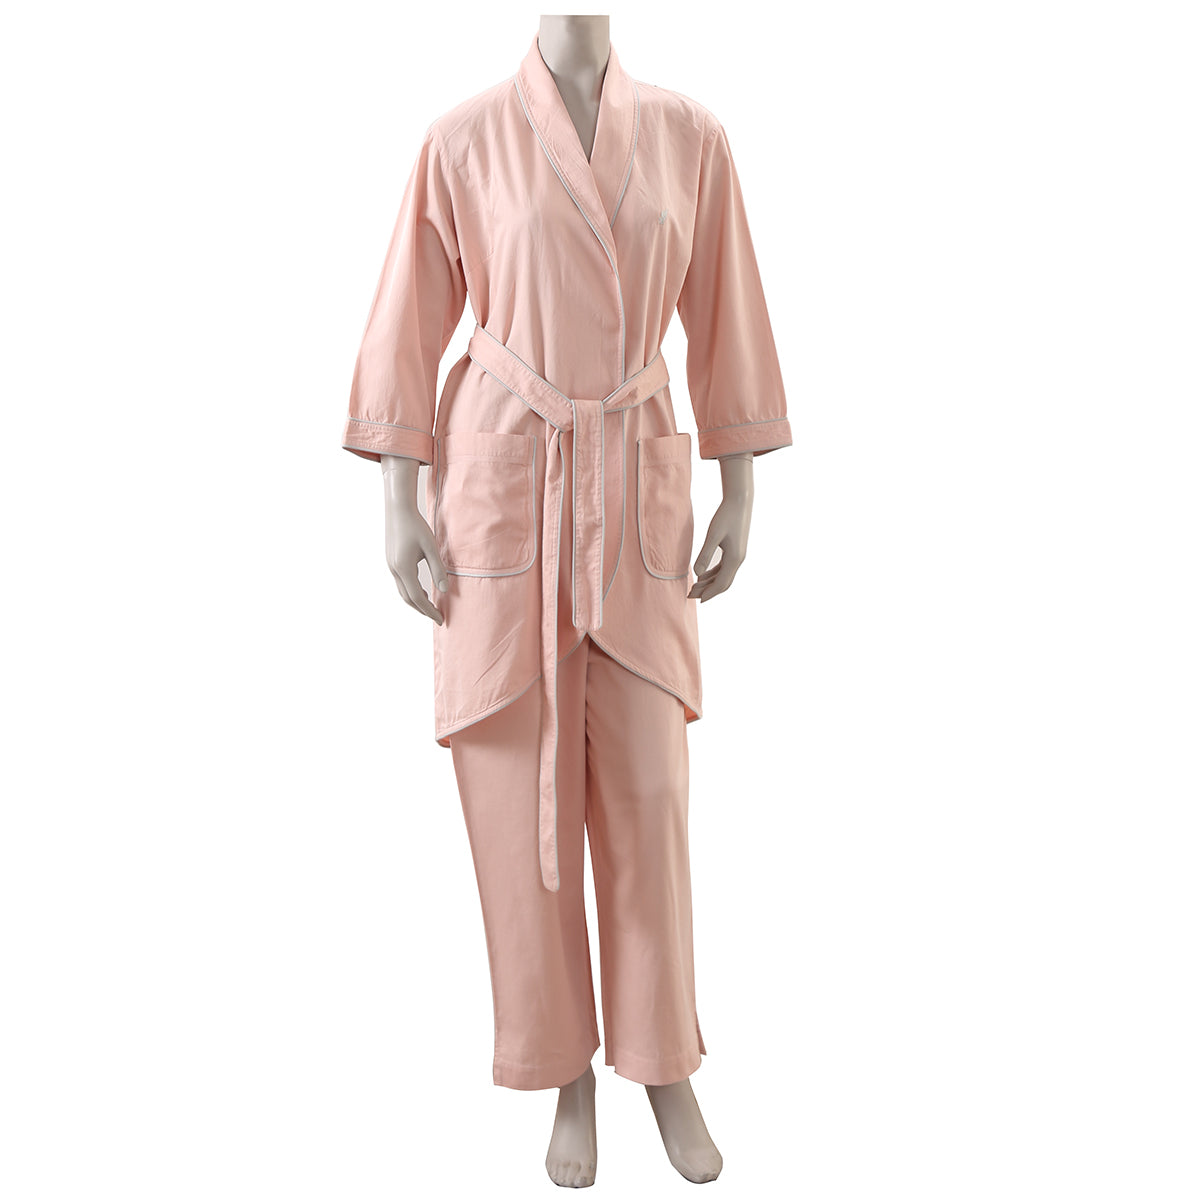 Melina 100% Cotton Solid Pink Women Large-X Large Loungewear Robe Set